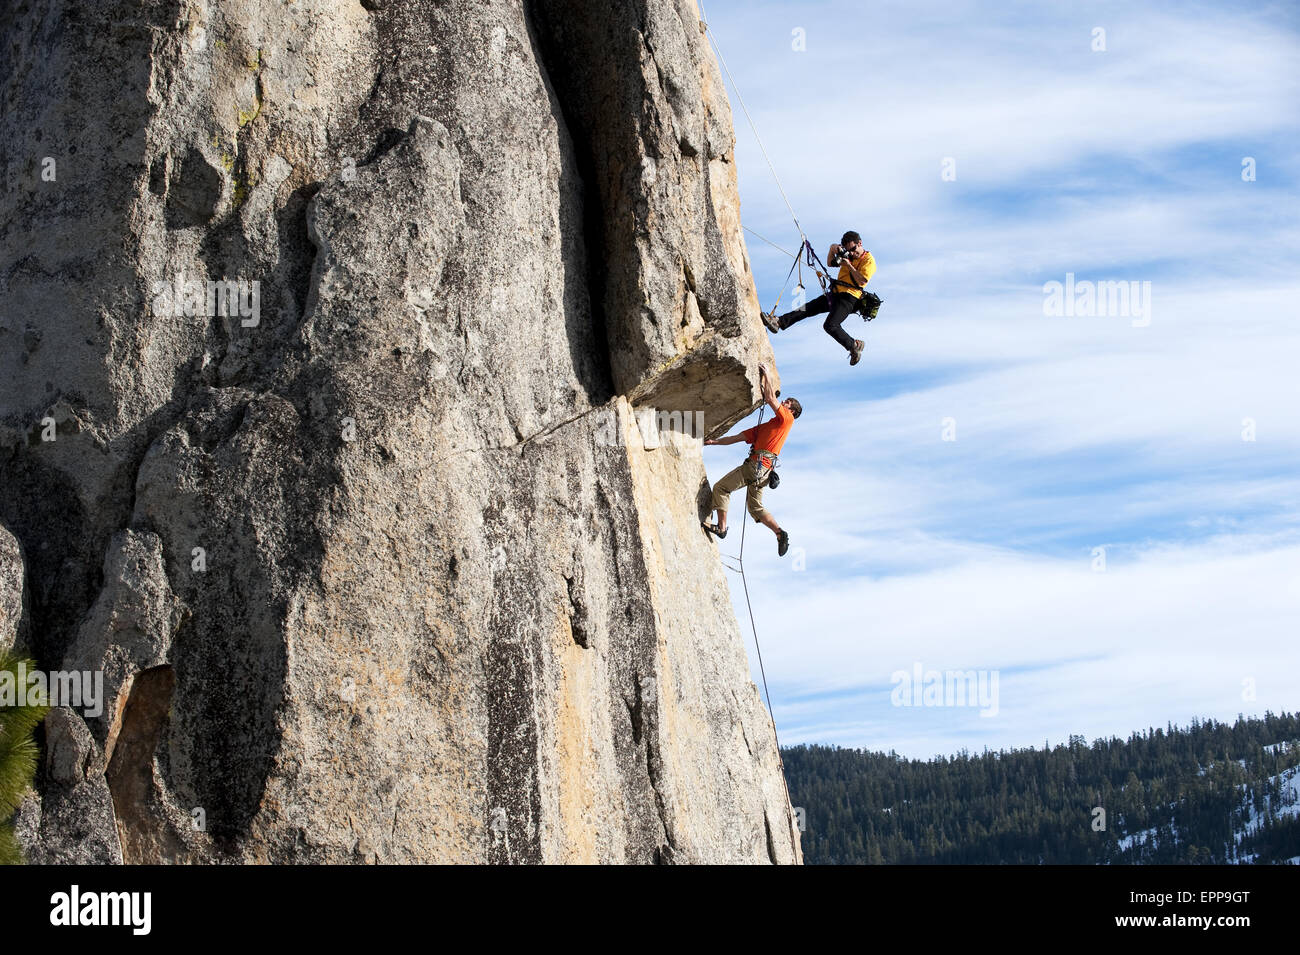 Un fotógrafo fotografías un escalador en California. Foto de stock